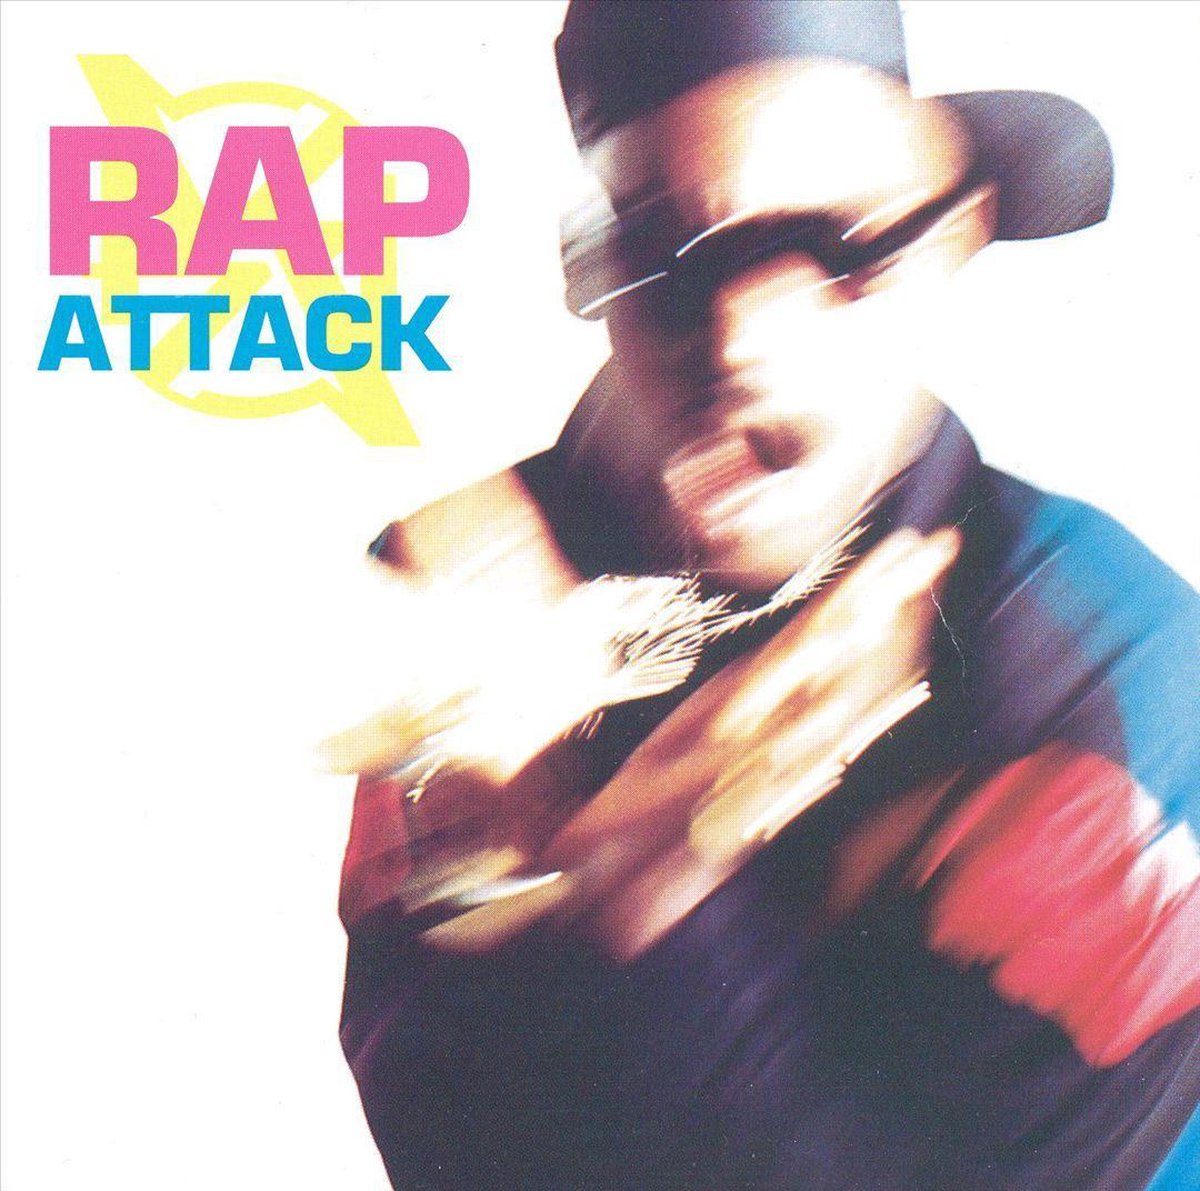 Rap Attack [K-Tel] - various artists